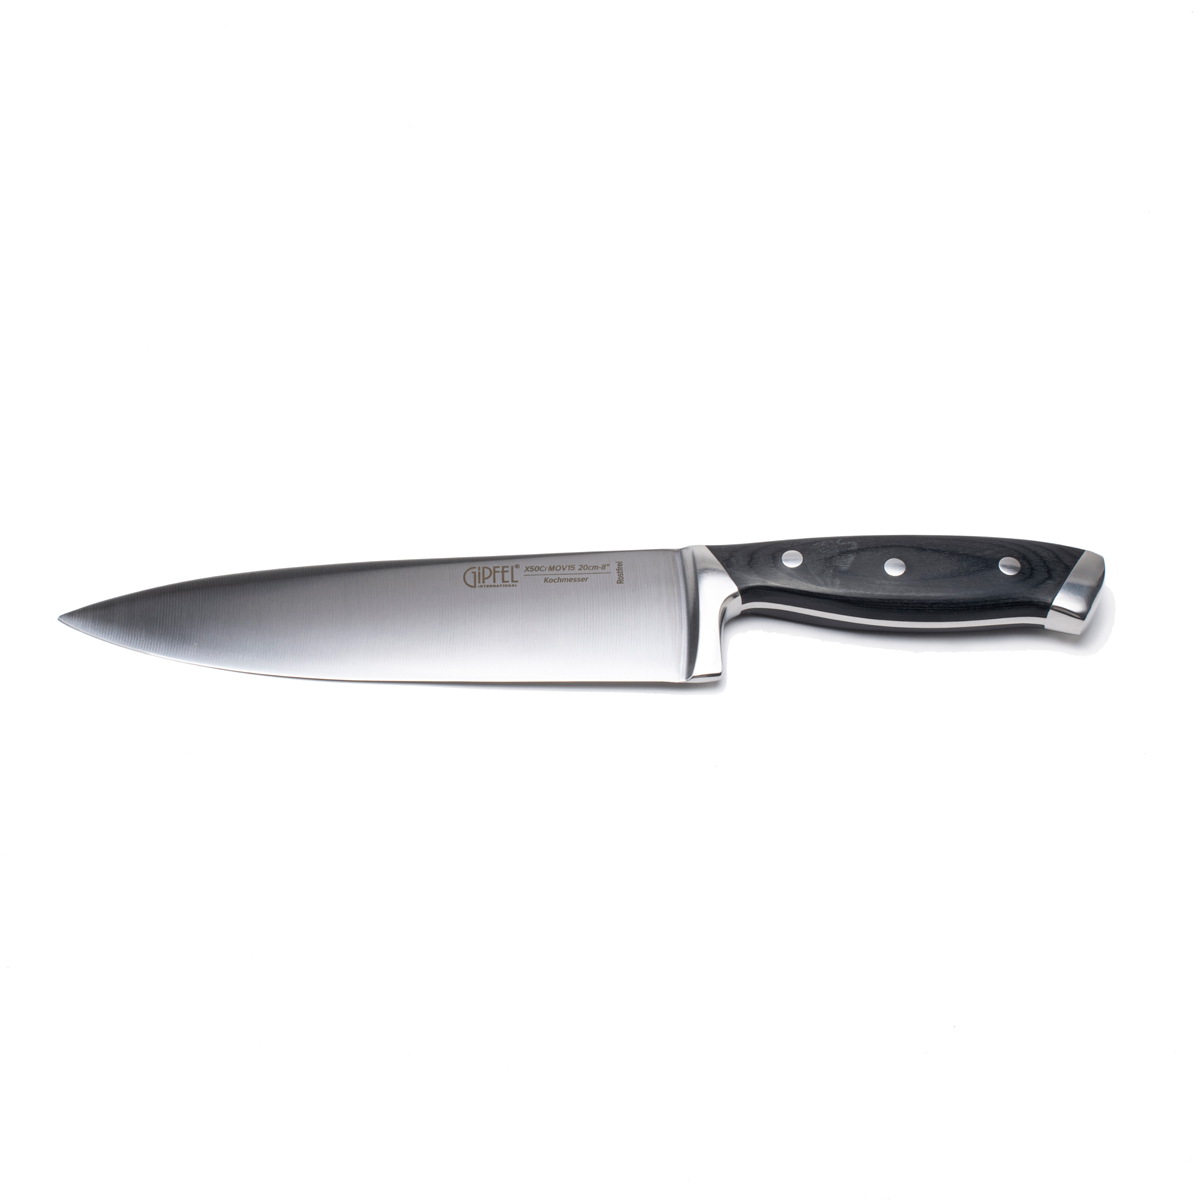 Нож поварской Gipfel Vilmarin 6979 нож attribute chef s select 20см поварской нерж сталь пластик